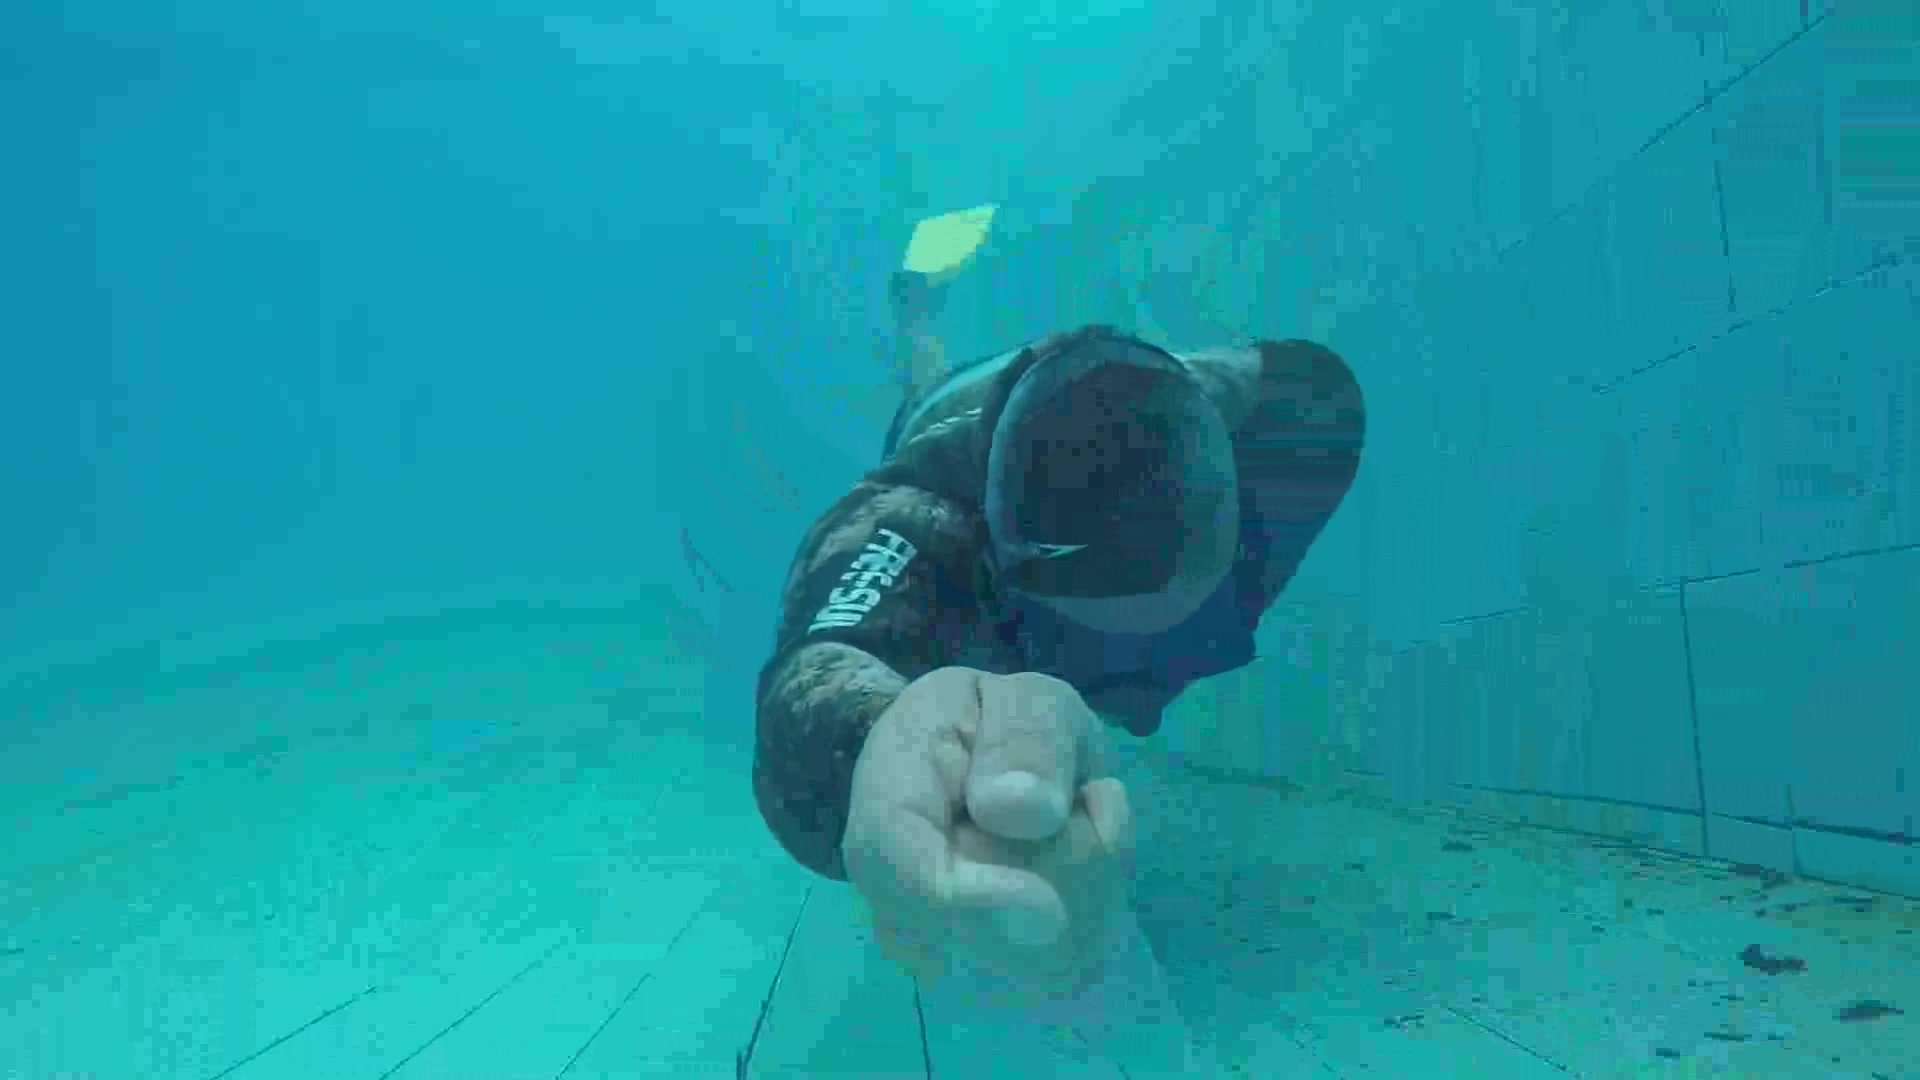 Kareem breatholding underwater in wetsuit